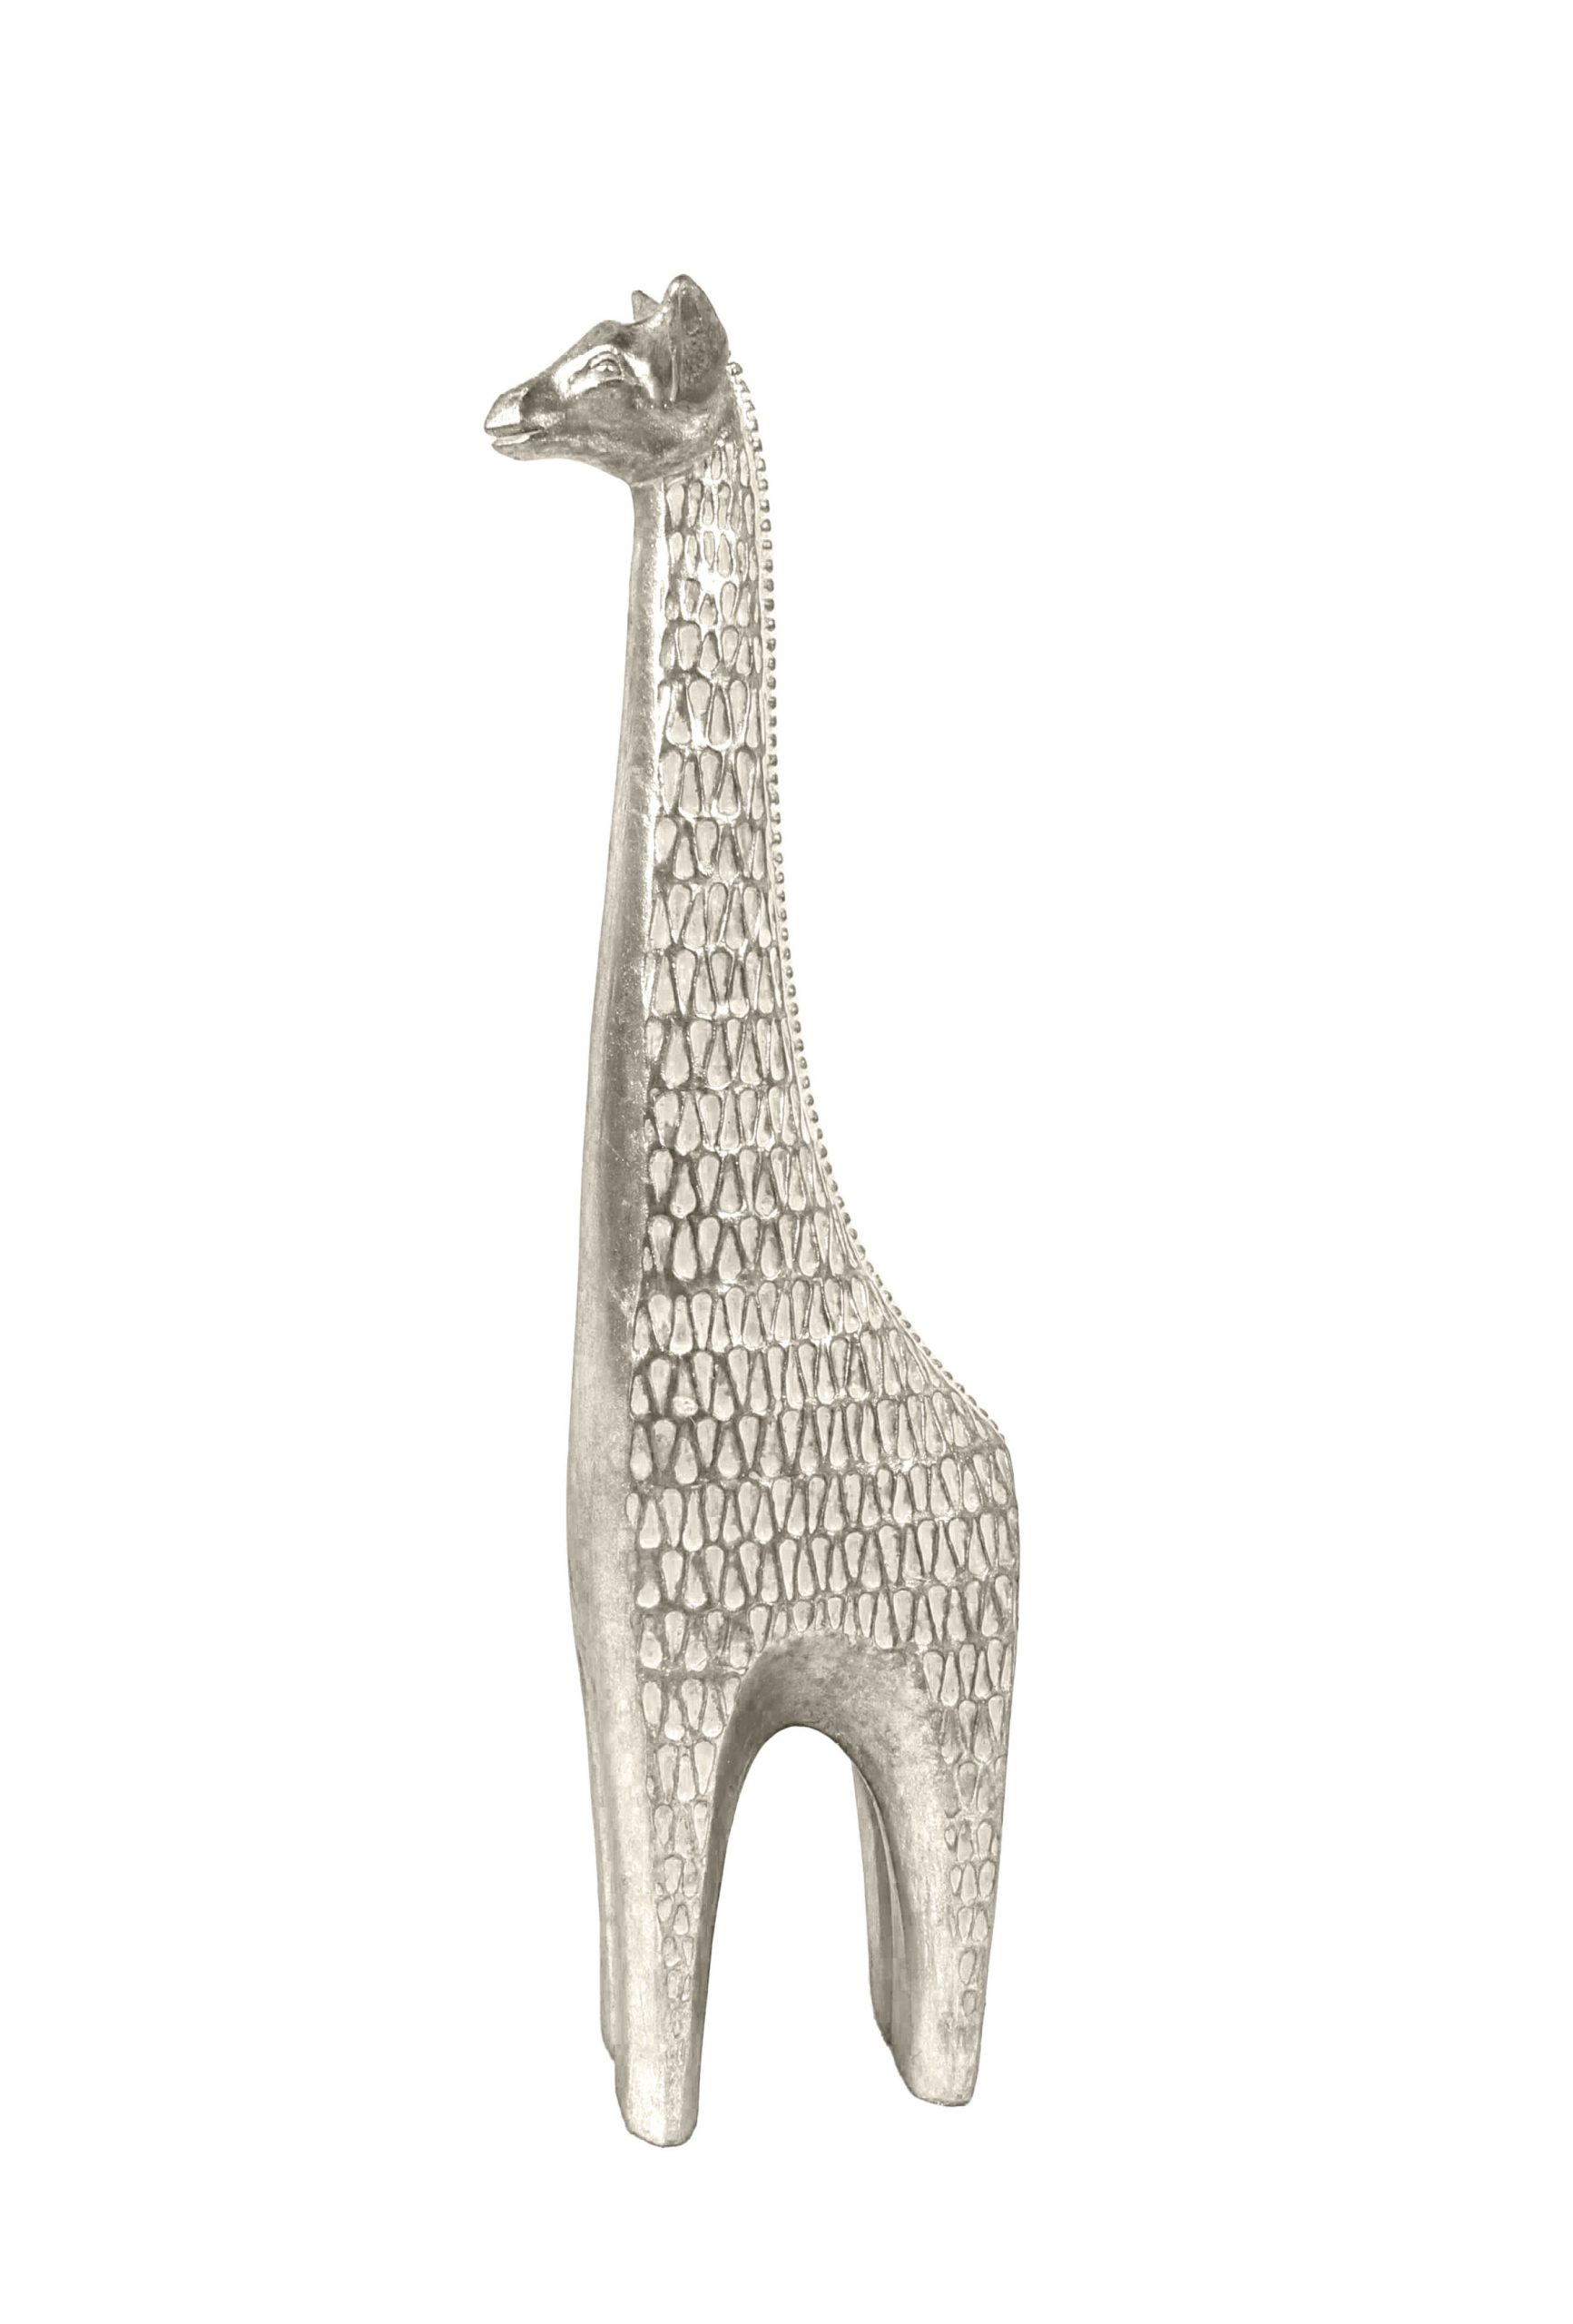 Afrikai zsiráf - szobor